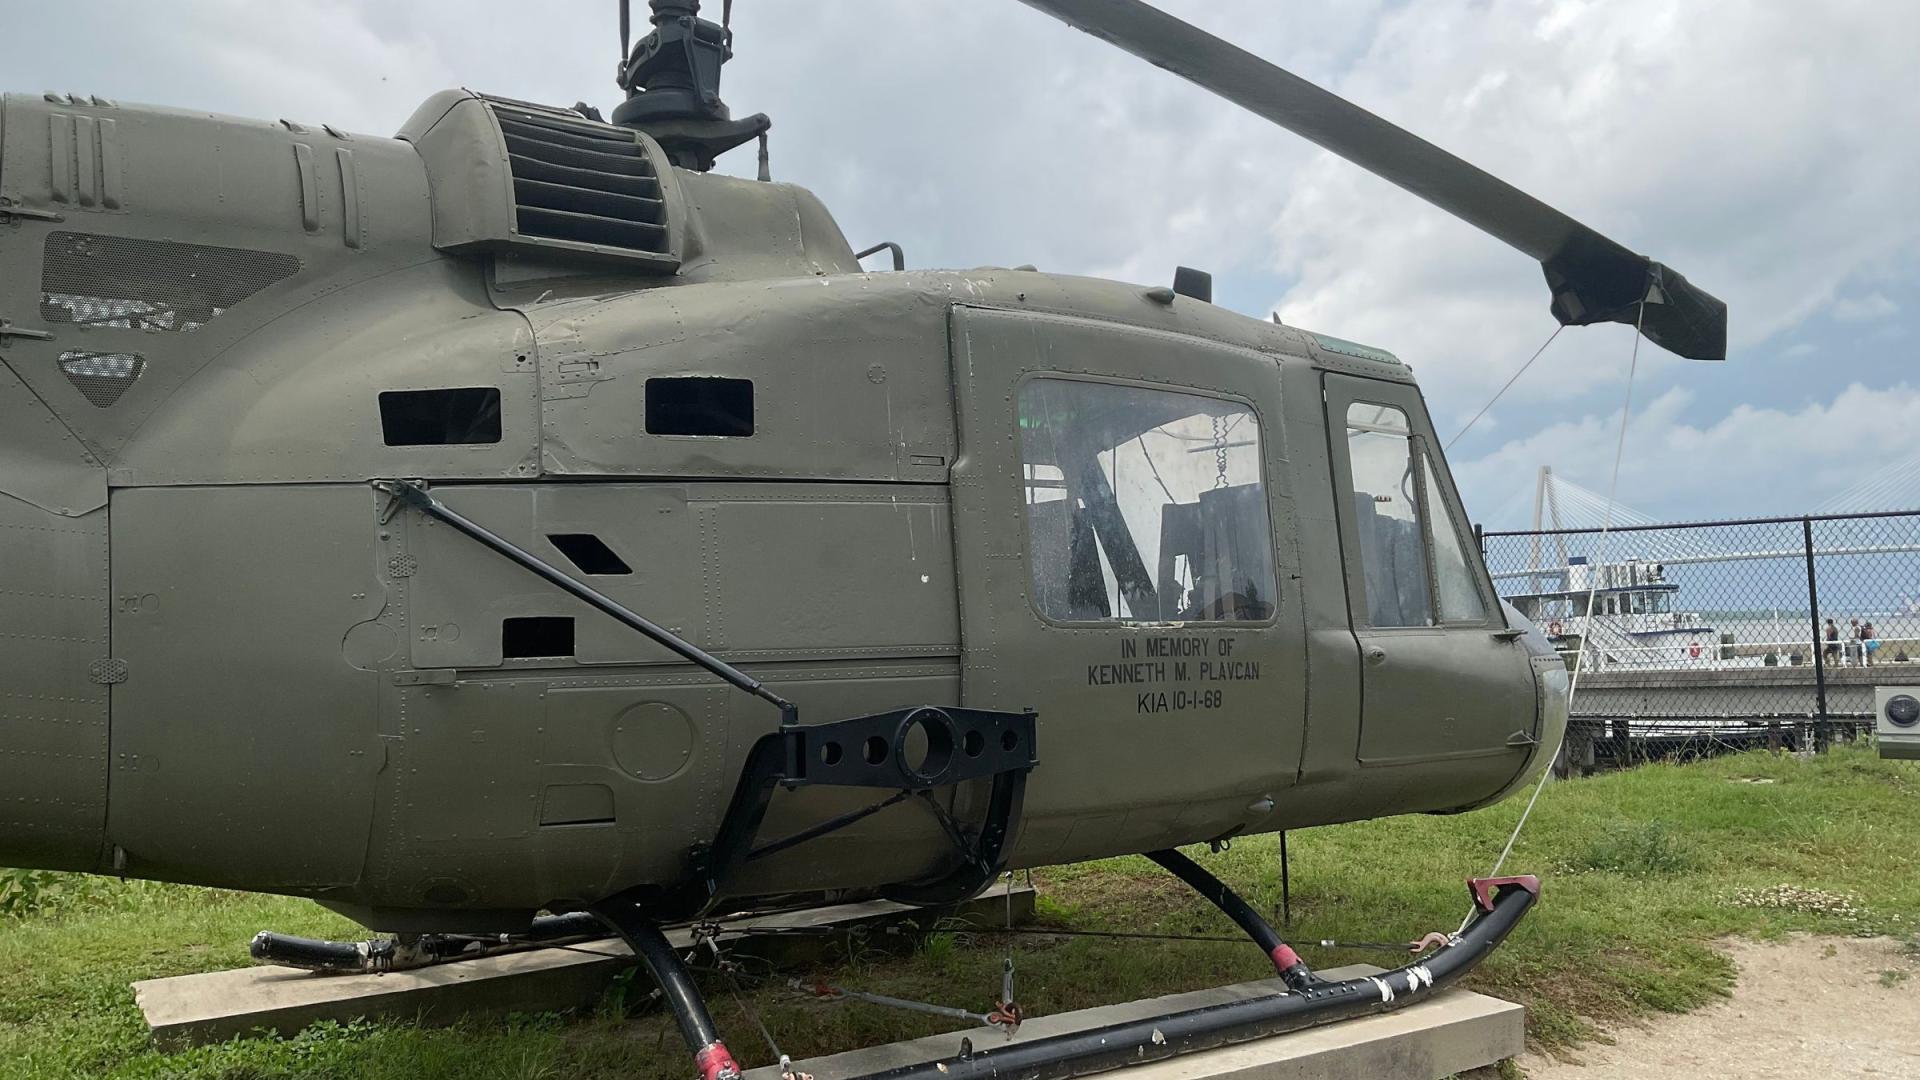 Alternative Image of UH-1M Iroquois "Huey"